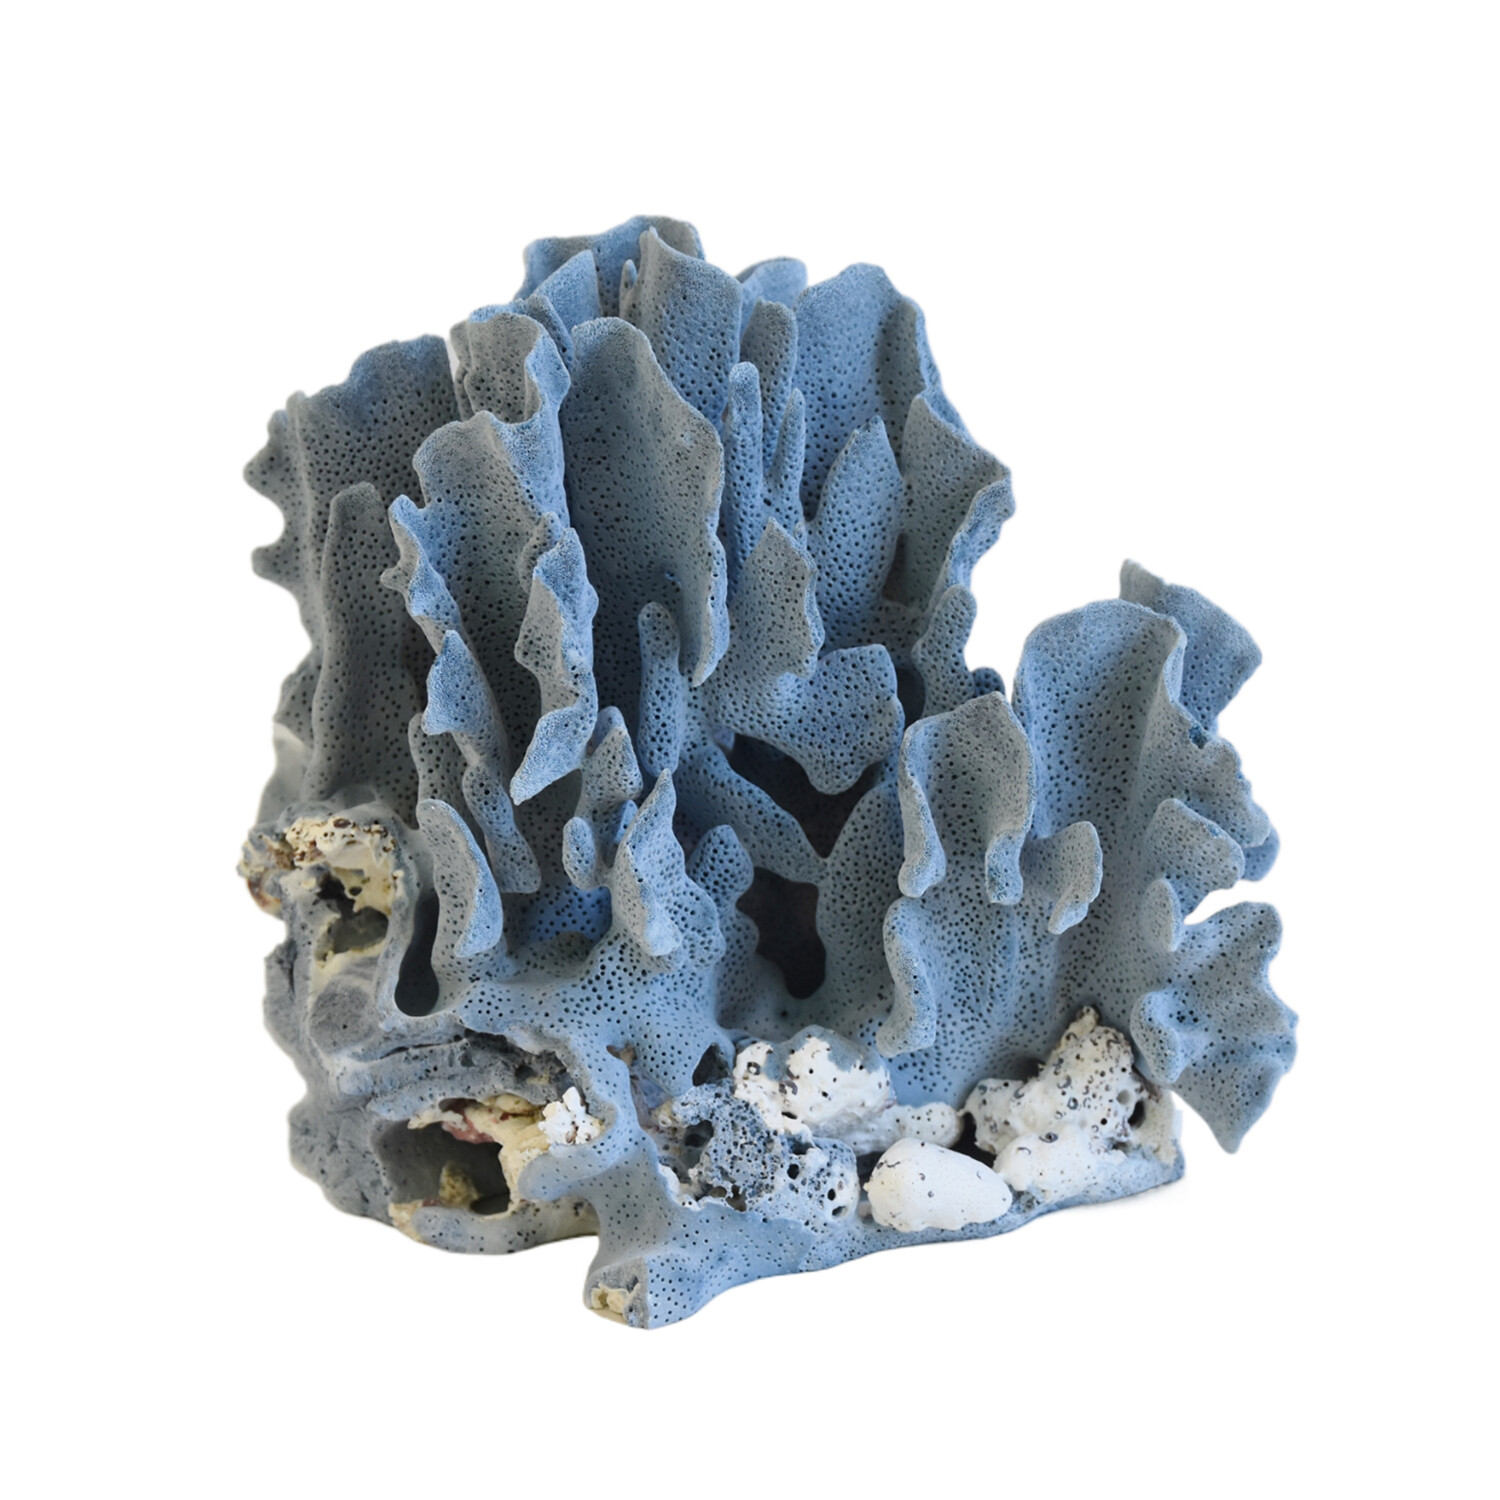 Authentic Blue Coral Specimen 5-7